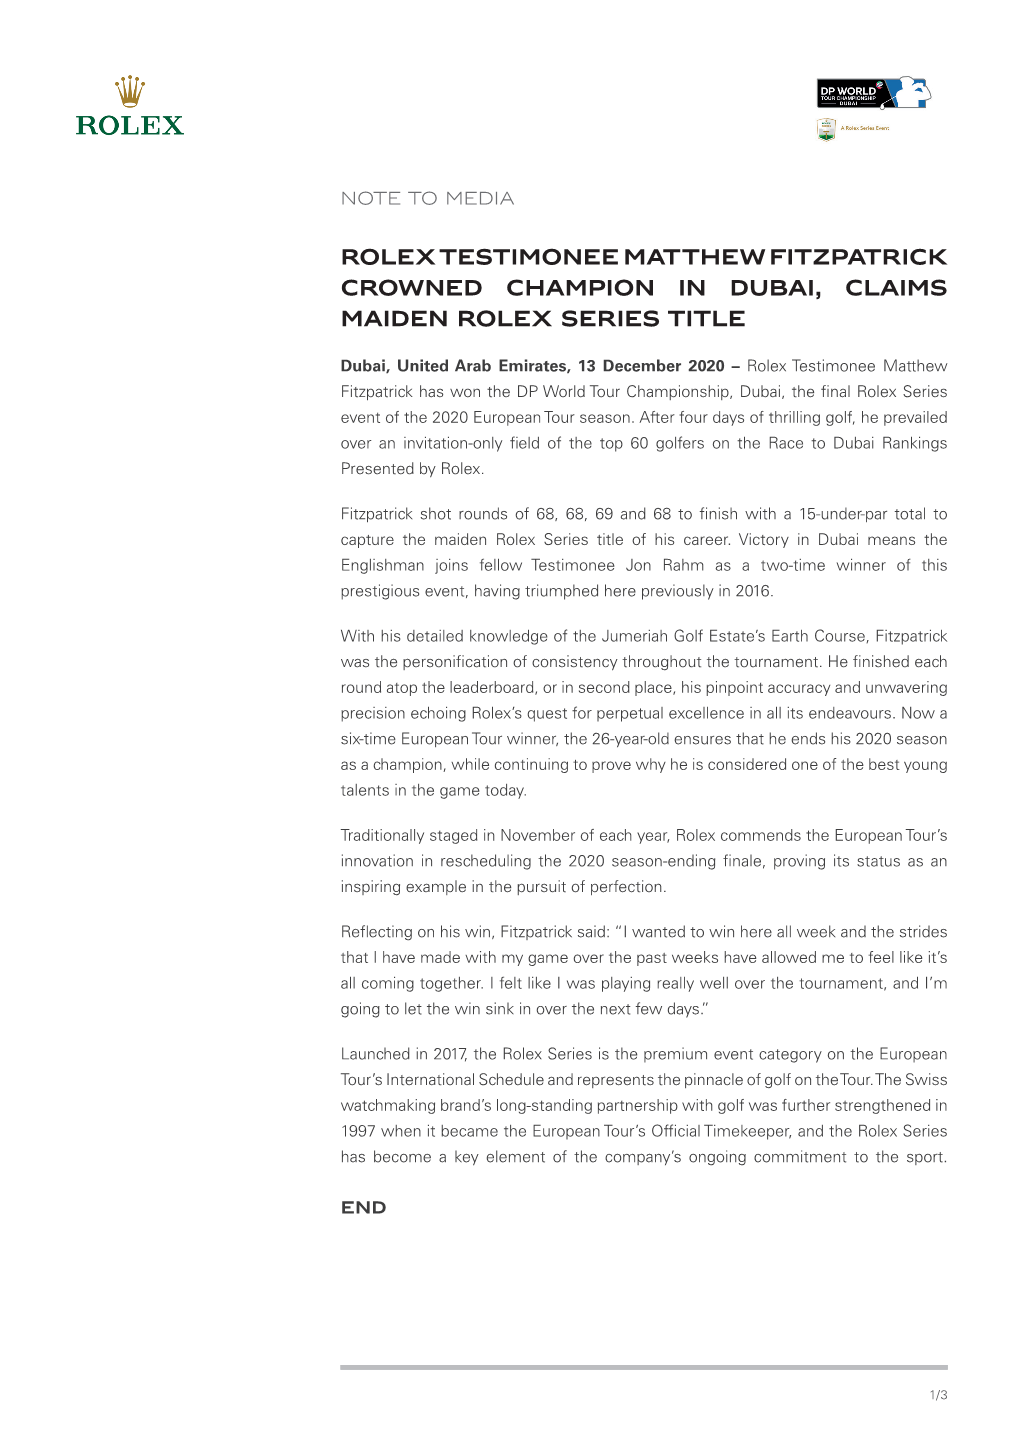 Rolex Testimonee Matthew Fitzpatrick Crowned Champion in Dubai, Claims Maiden Rolex Series Title